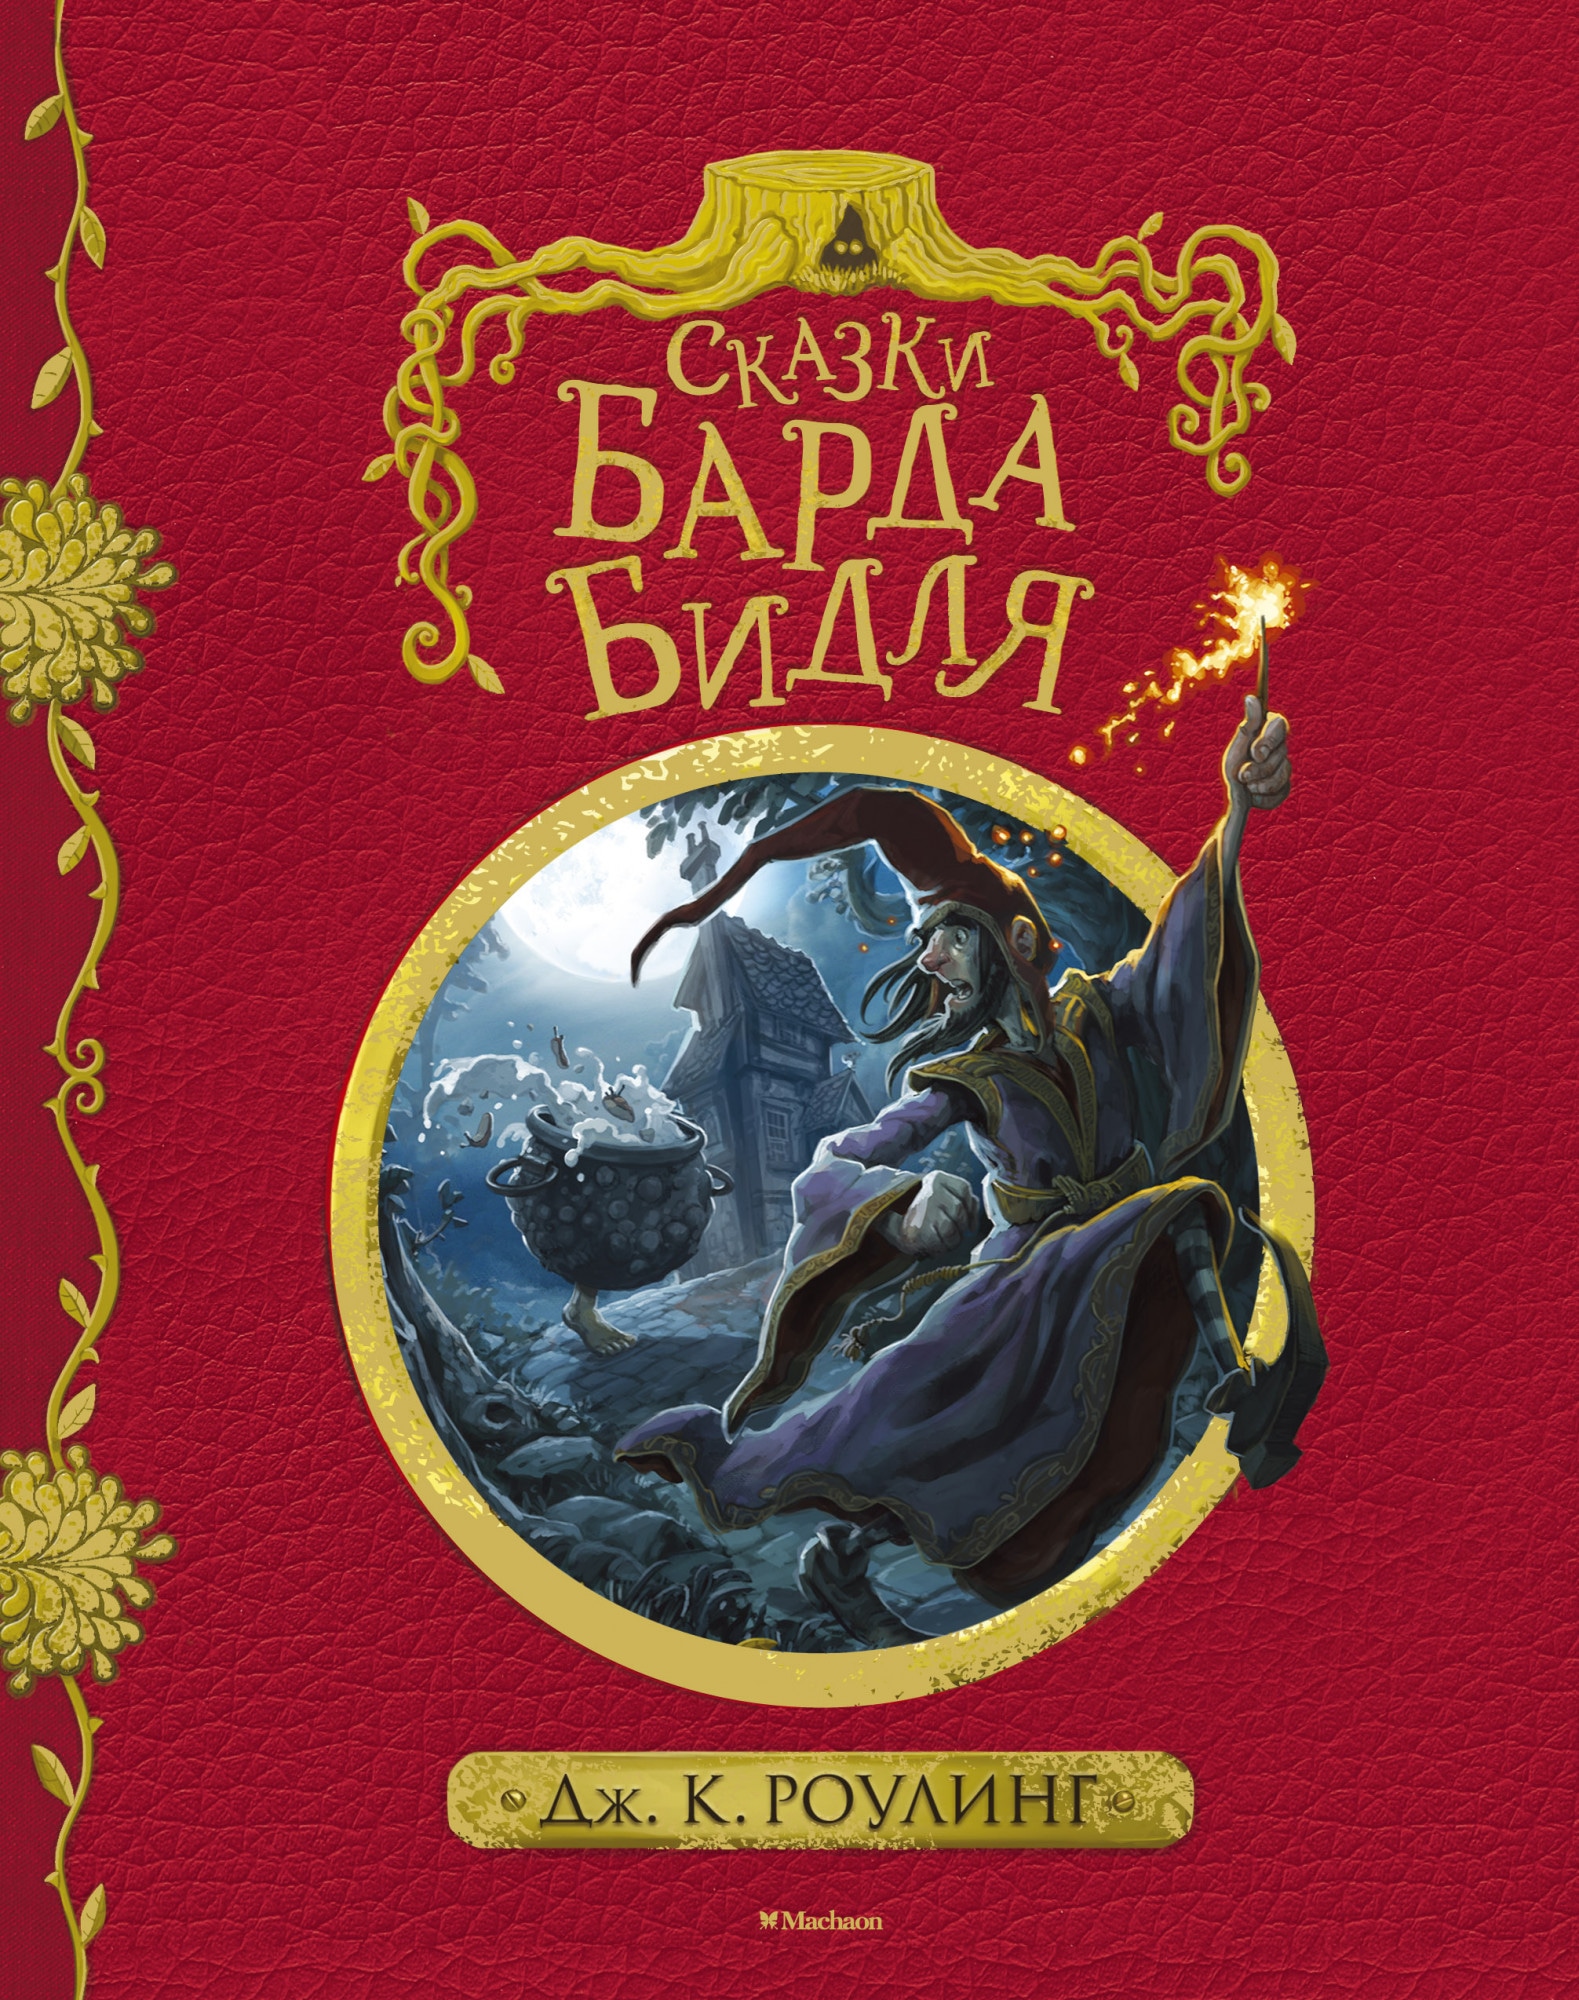 Book “Сказки Барда Бидля (с черно-белыми иллюстрациями)” by Дж.К. Роулинг — 2021